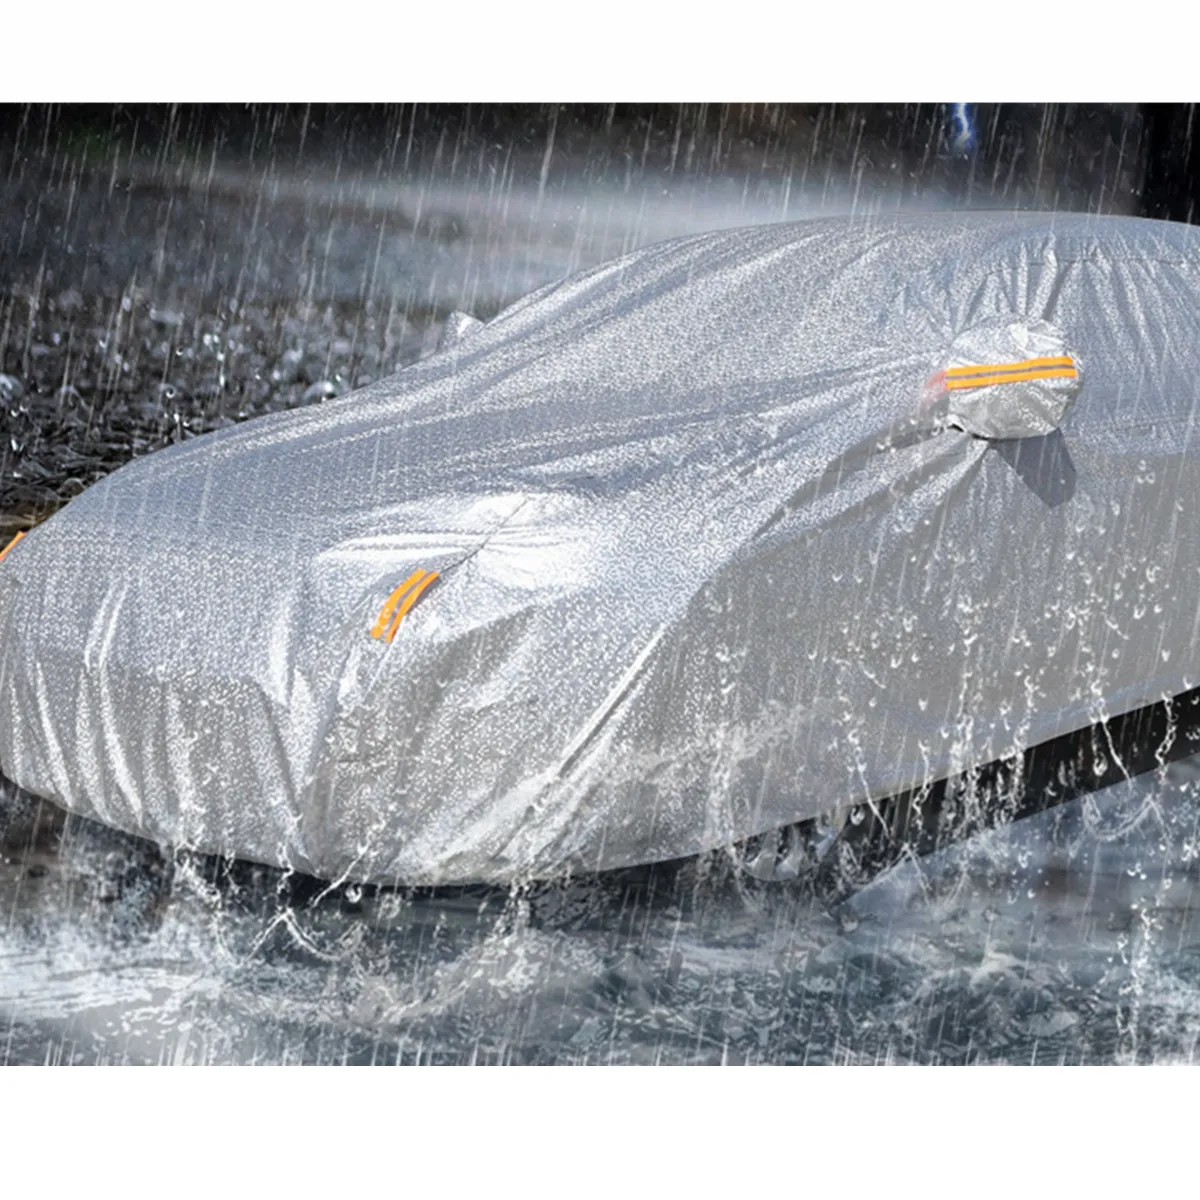 Full Autos Car Cover Waterproof Windproof UV Resistant Snow Rain Dust Indoor Outdoor Protection Protector